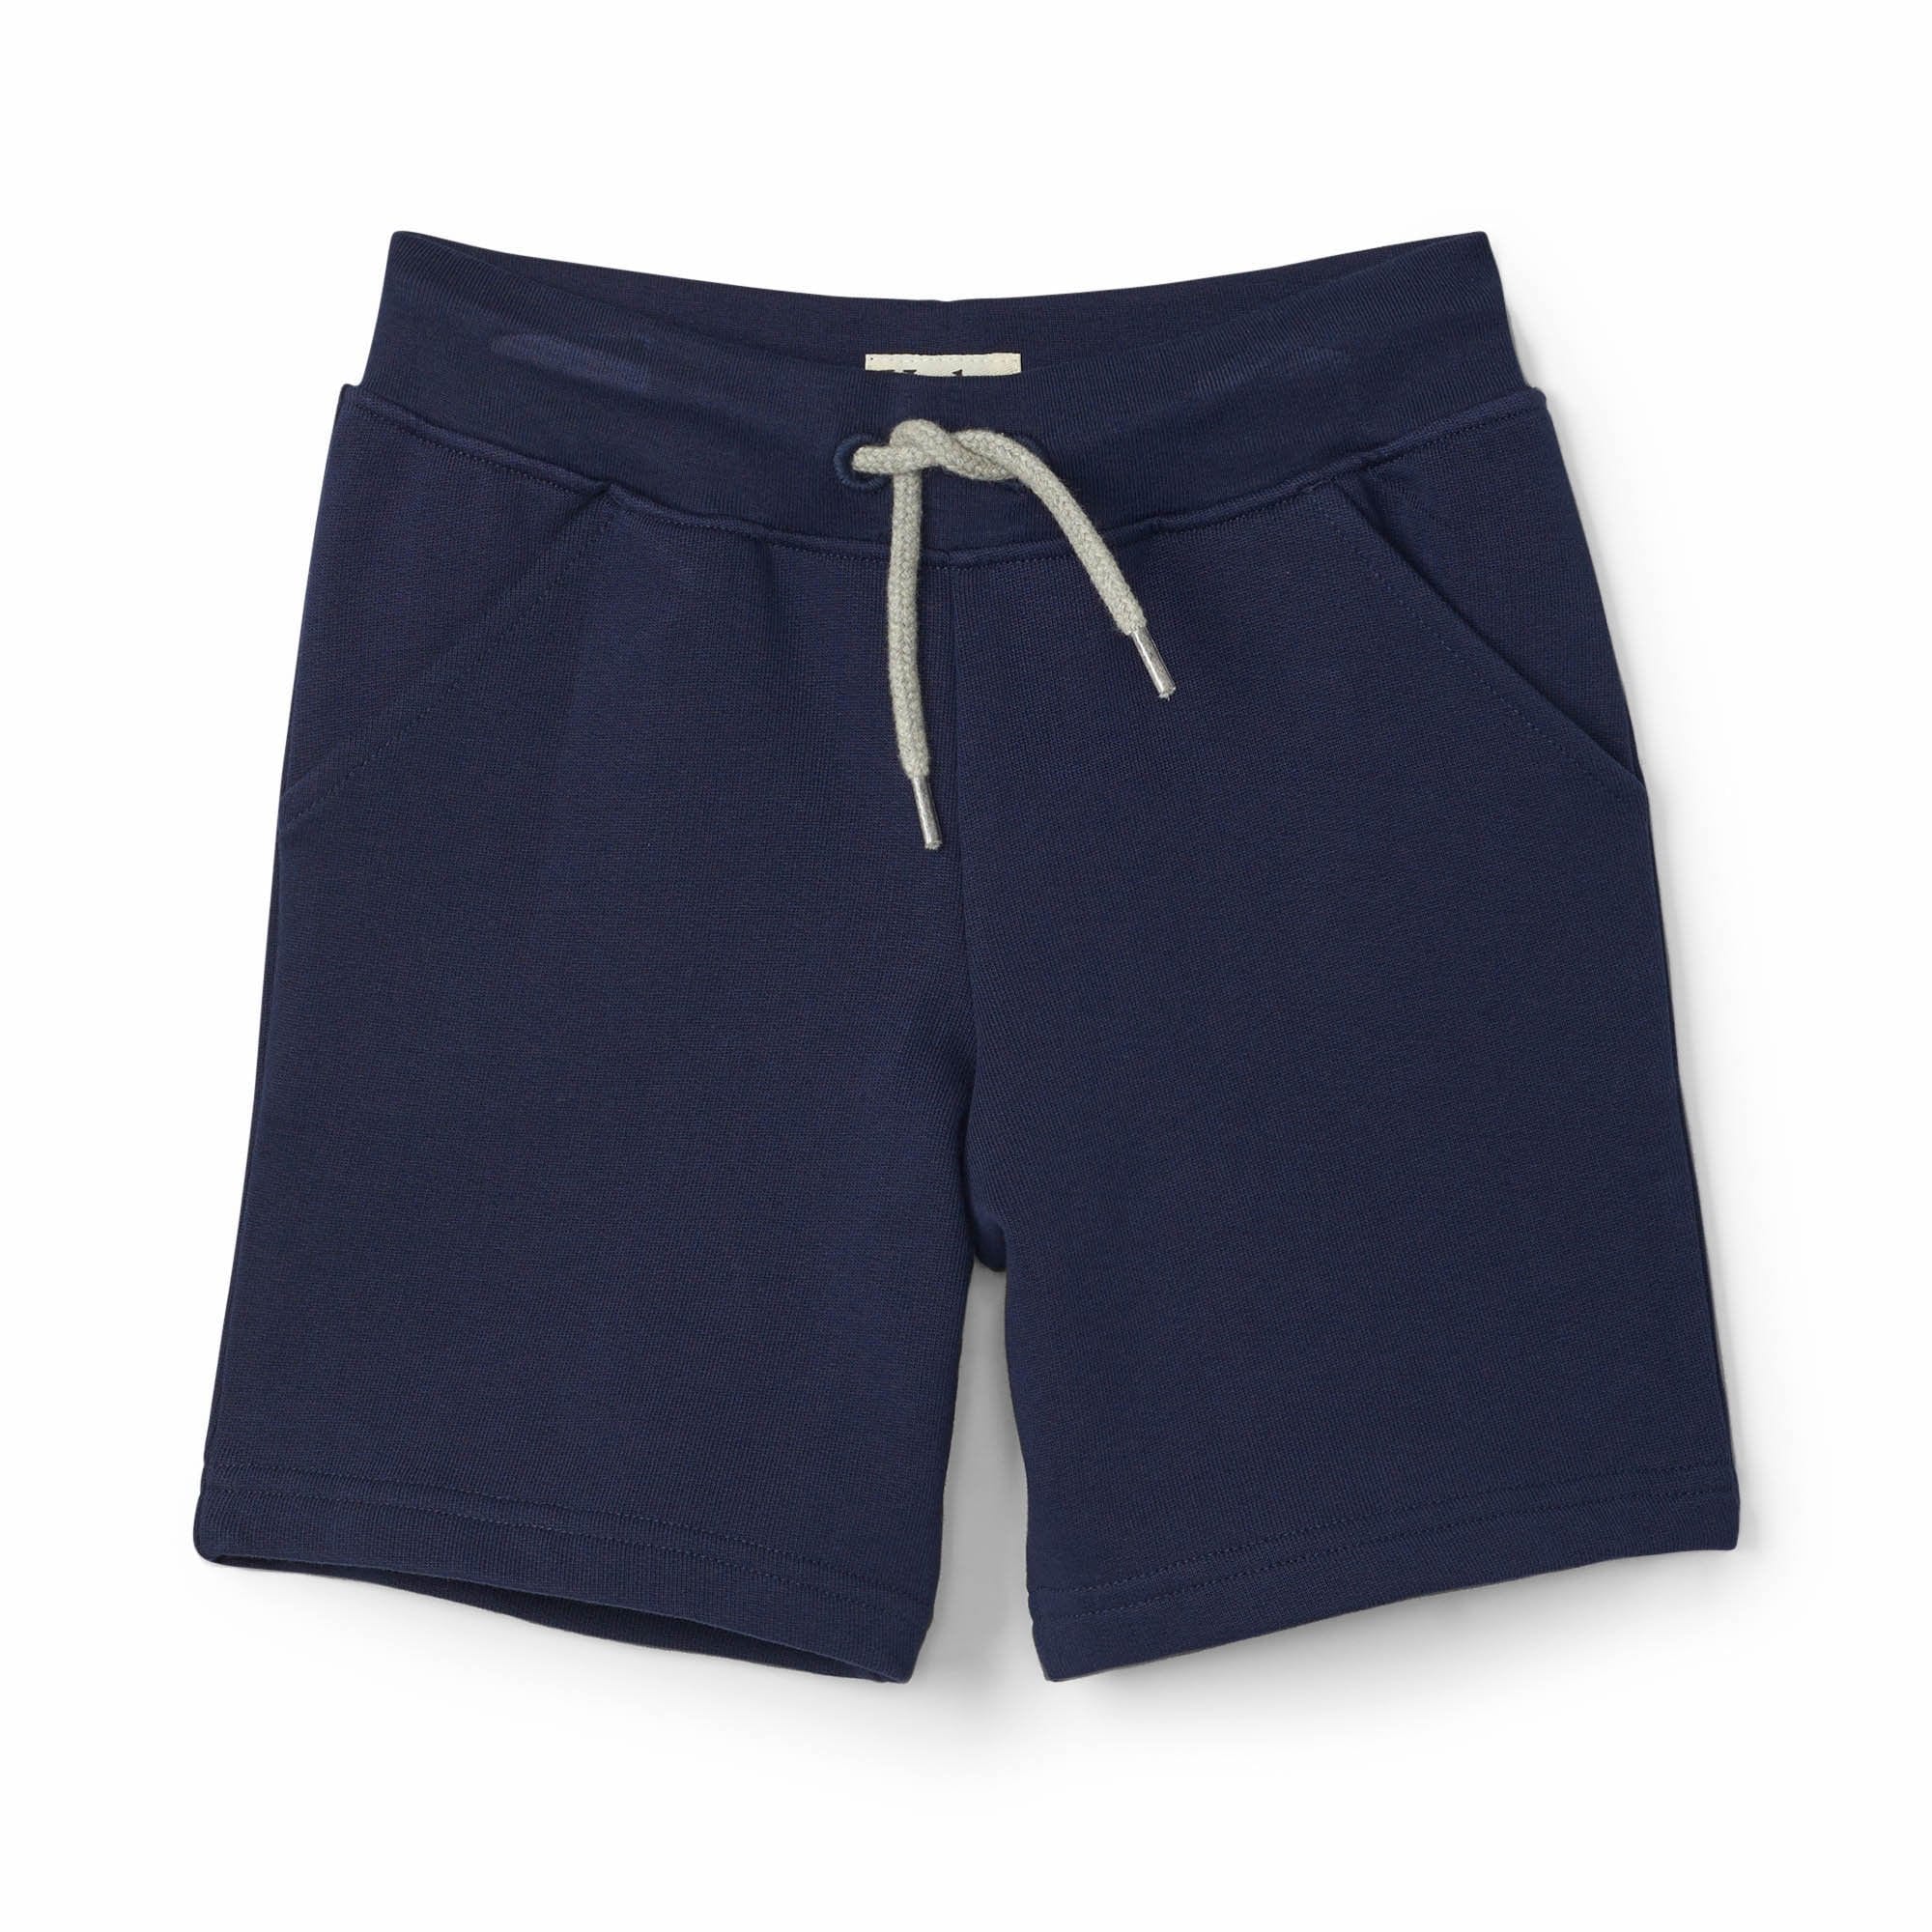 Hatley Navy Athletic Shorts - Shorts